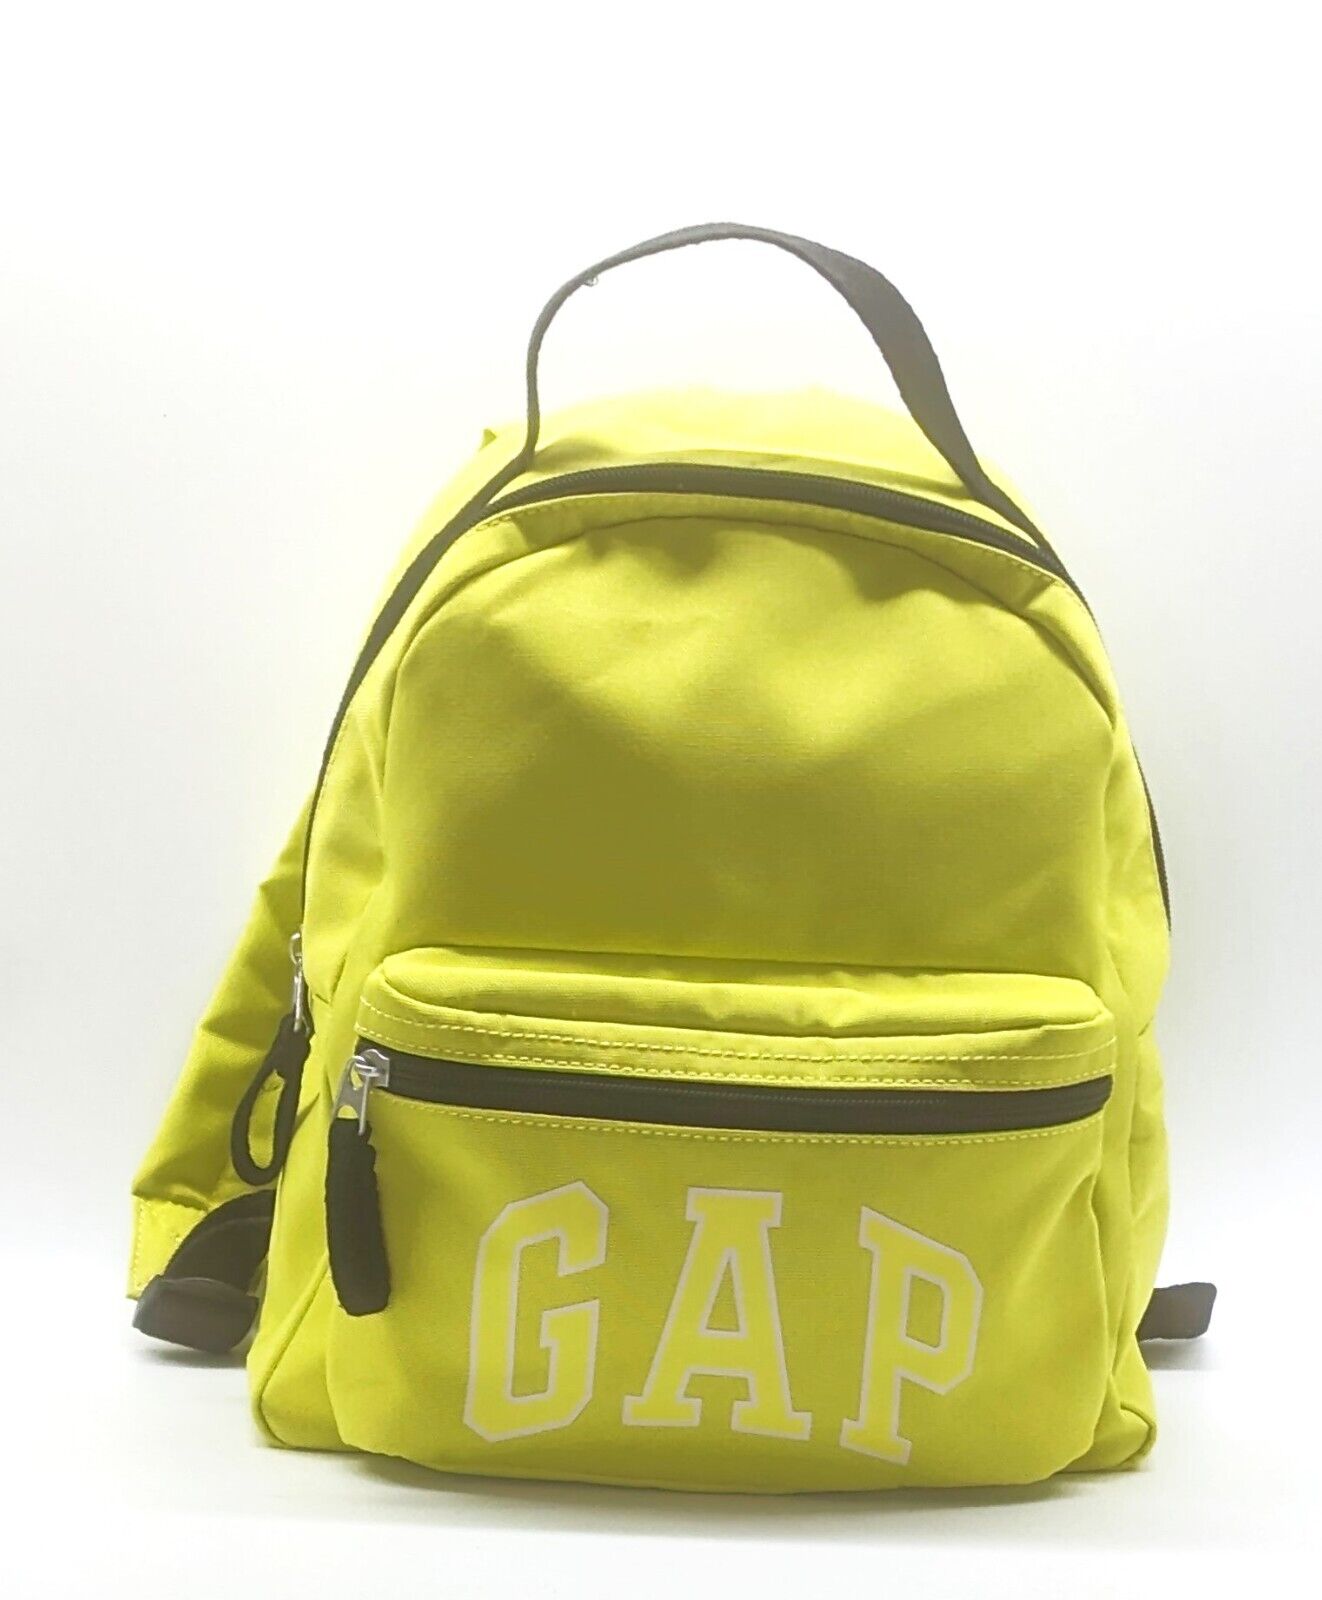 Gap Backpack Columbia lime RRP £39